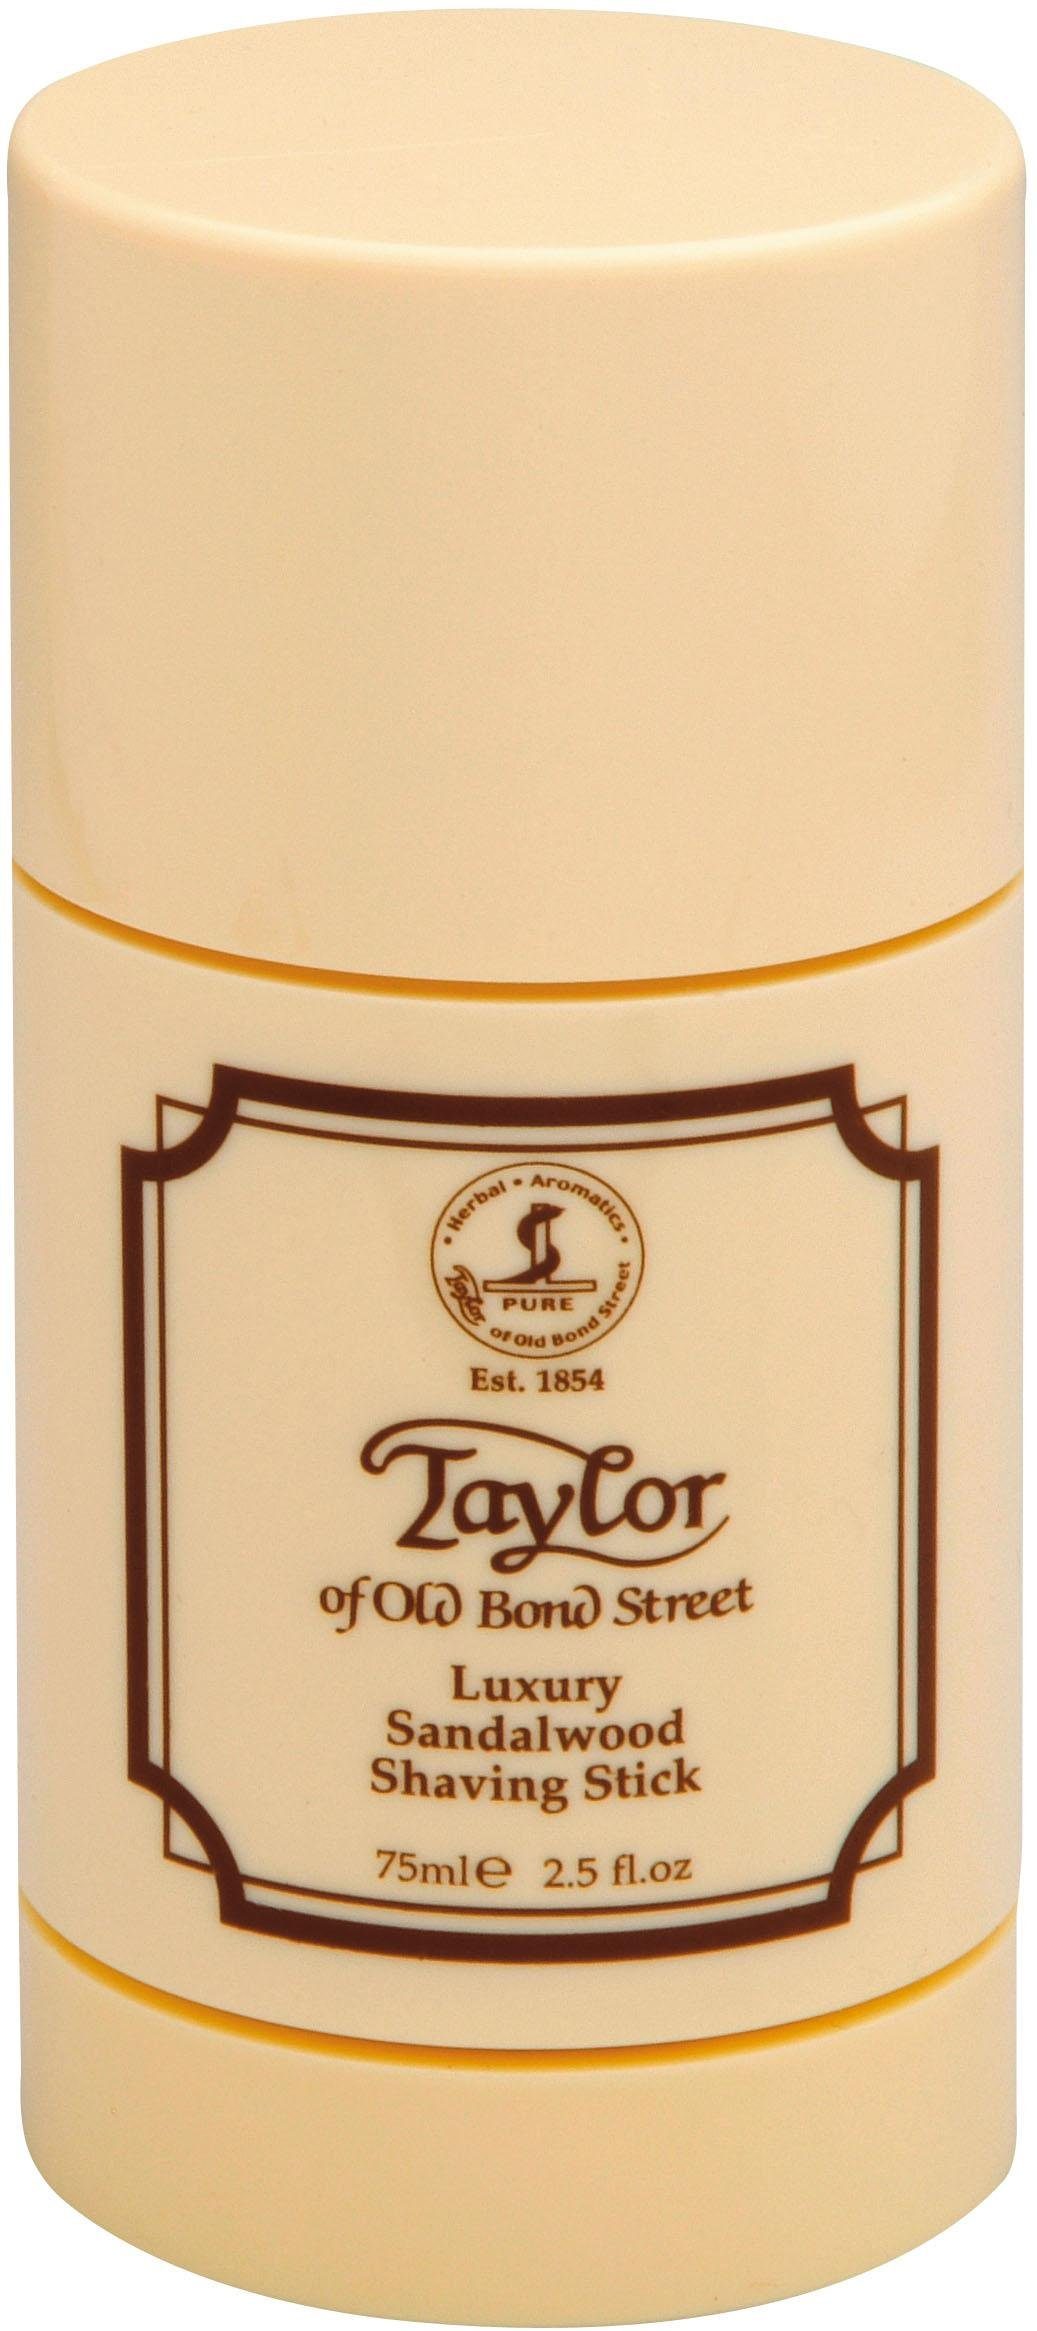 Sandalwood, Rasierseife Street Taylor Stick Shaving of Soap Stift Bond Old